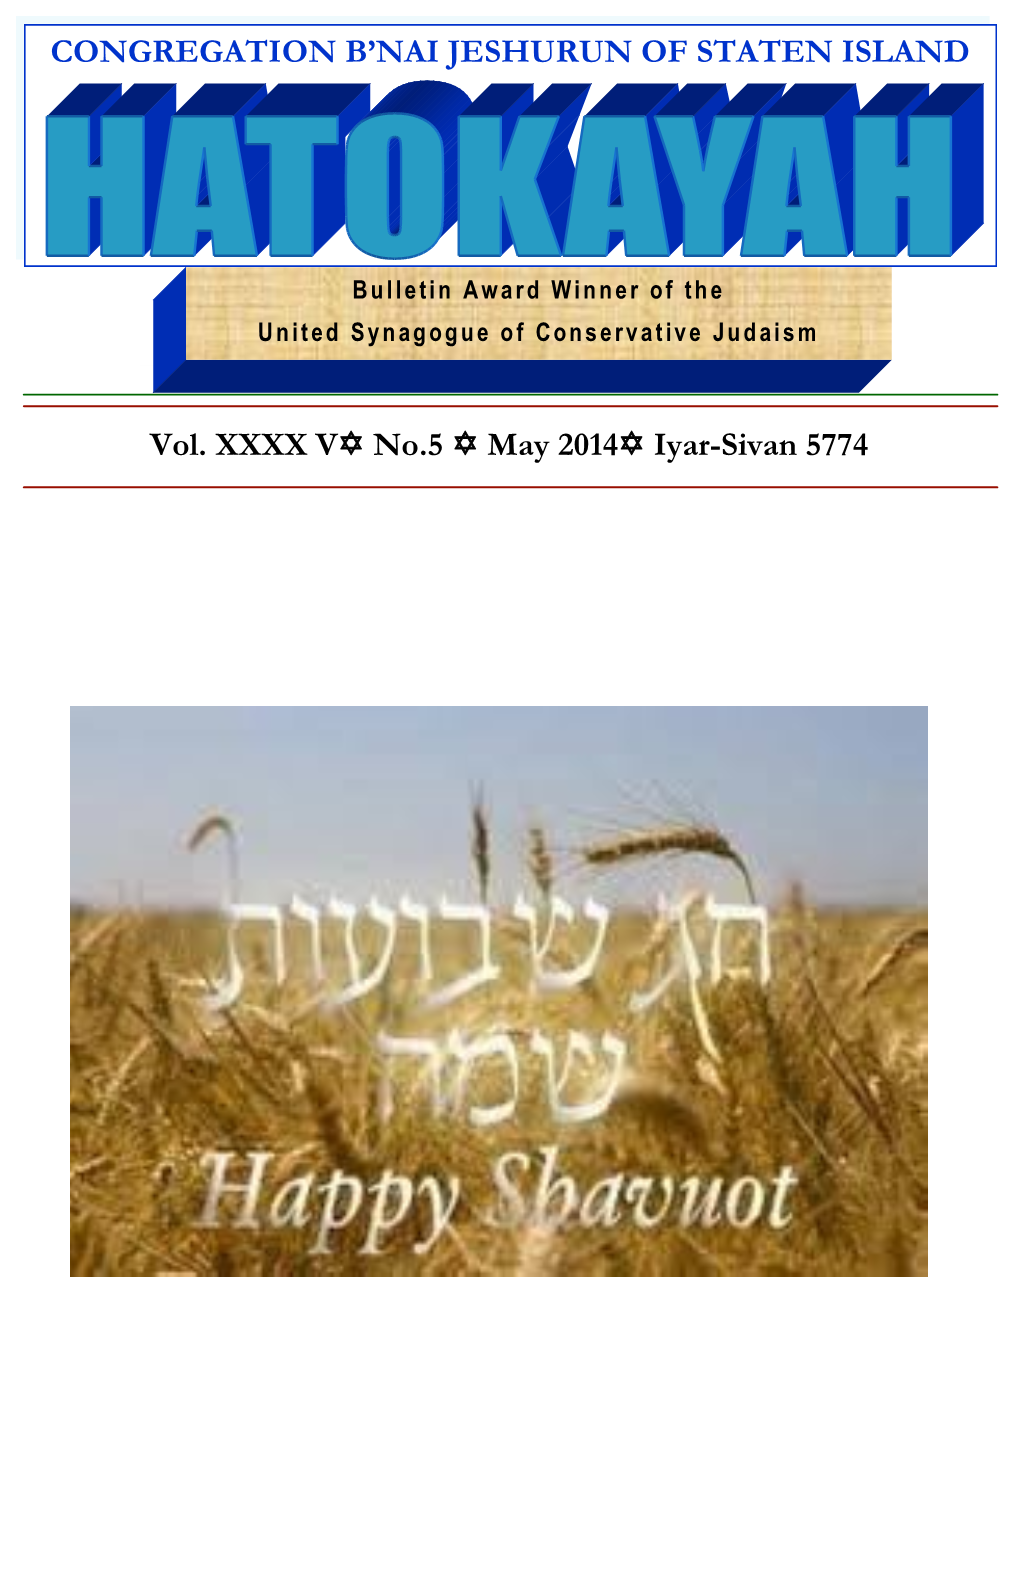 Vol. XXXX V No.5 May 2014 Iyar-Sivan 5774 CONGREGATION